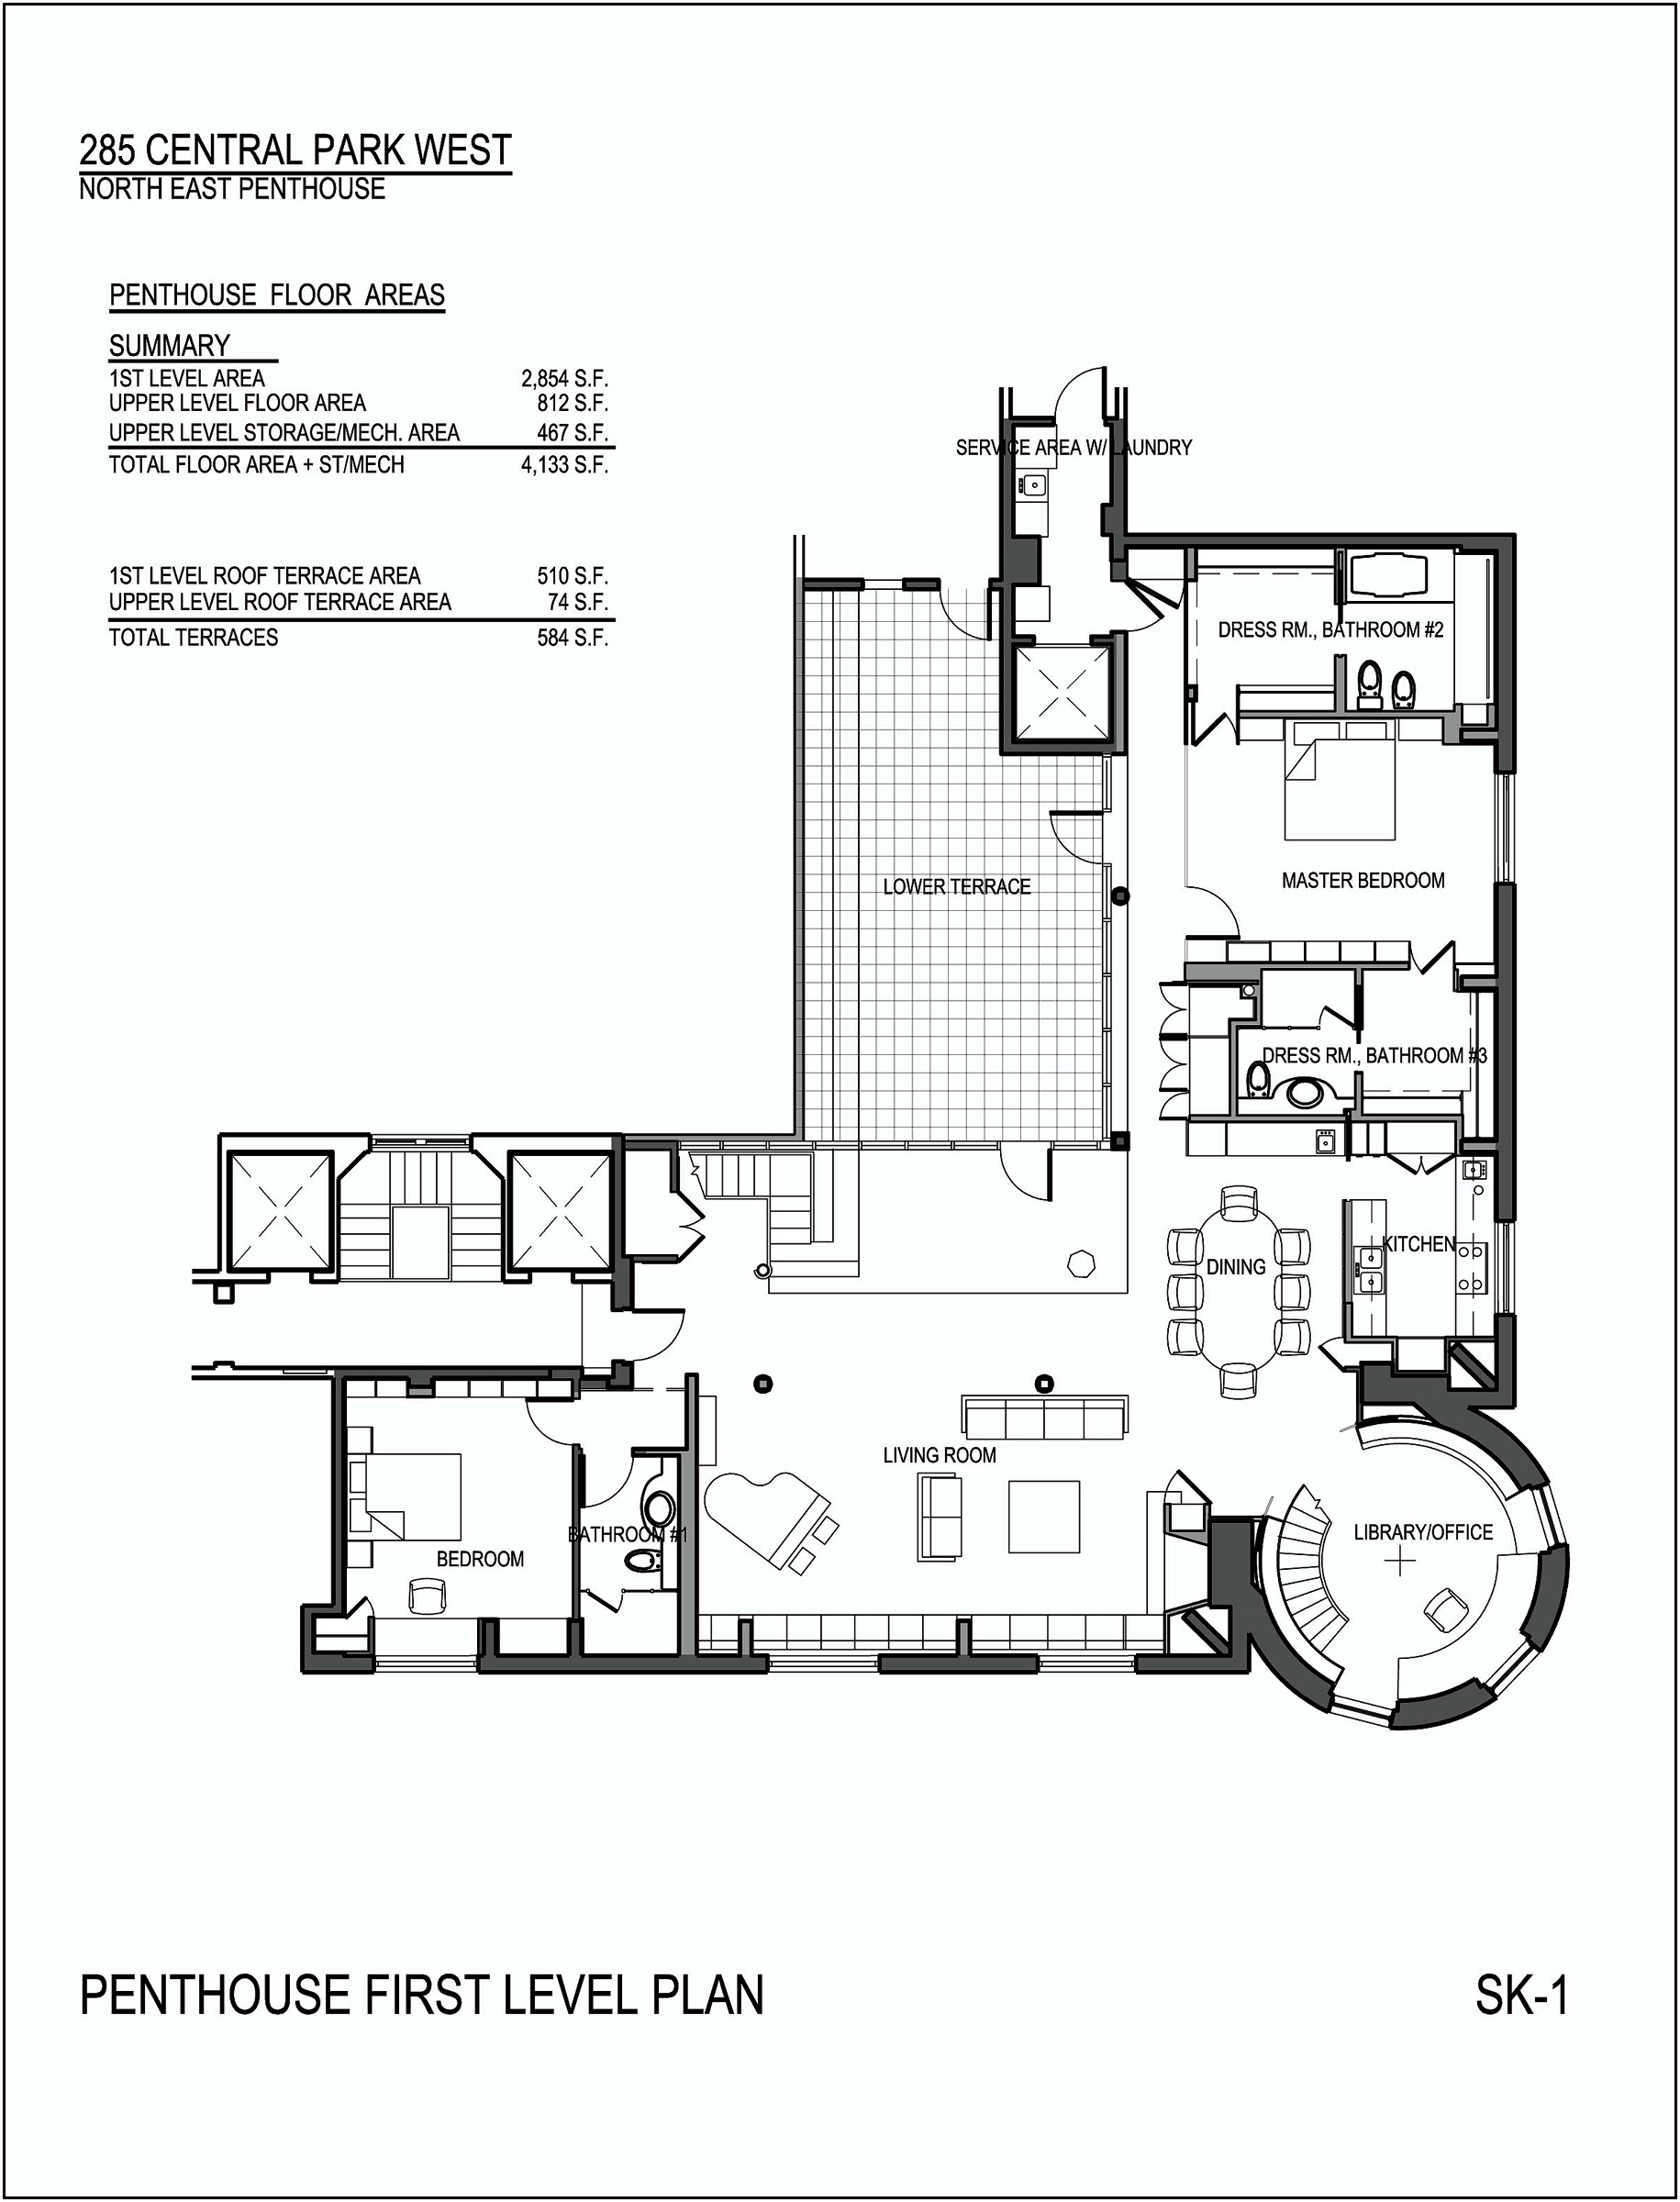 Penthouse Floor Plan sk-1.jpg